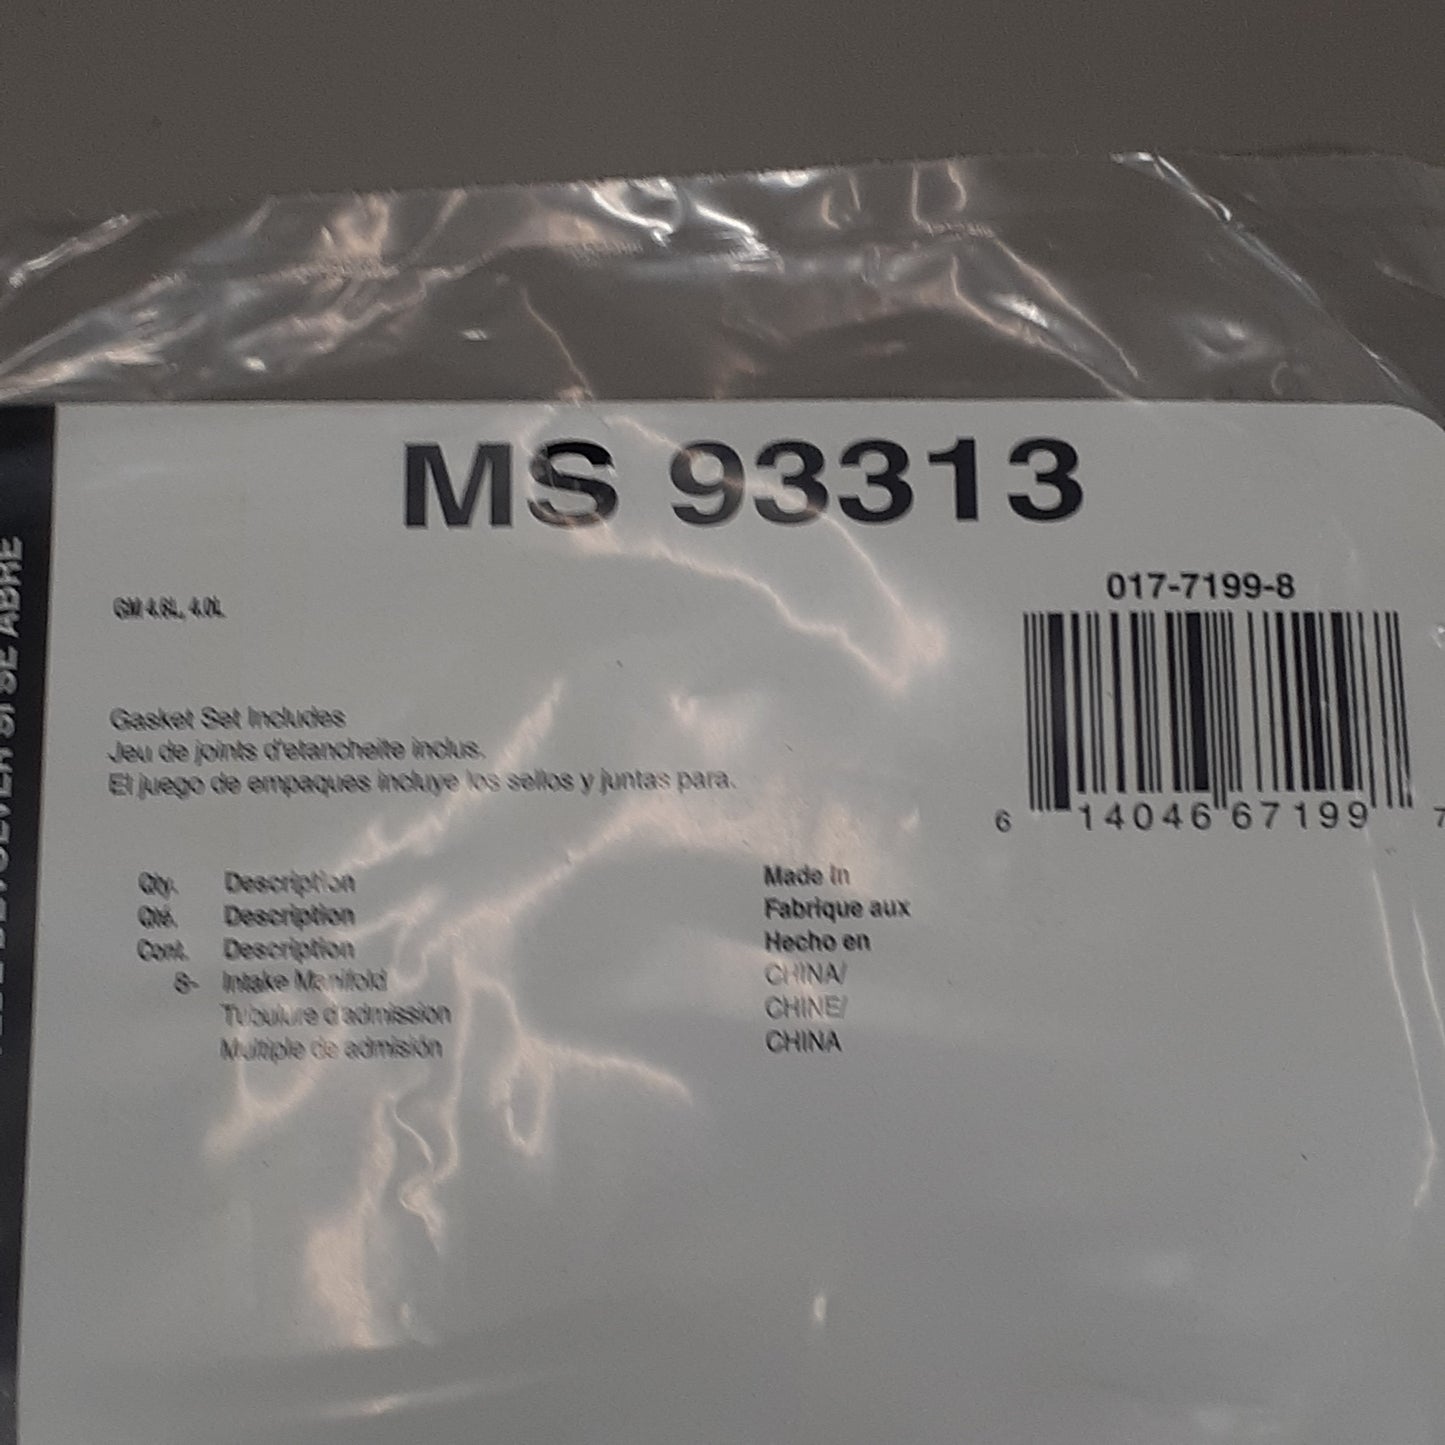 FEL-PRO Intake Manifold Gasket Set MS93313 (New)